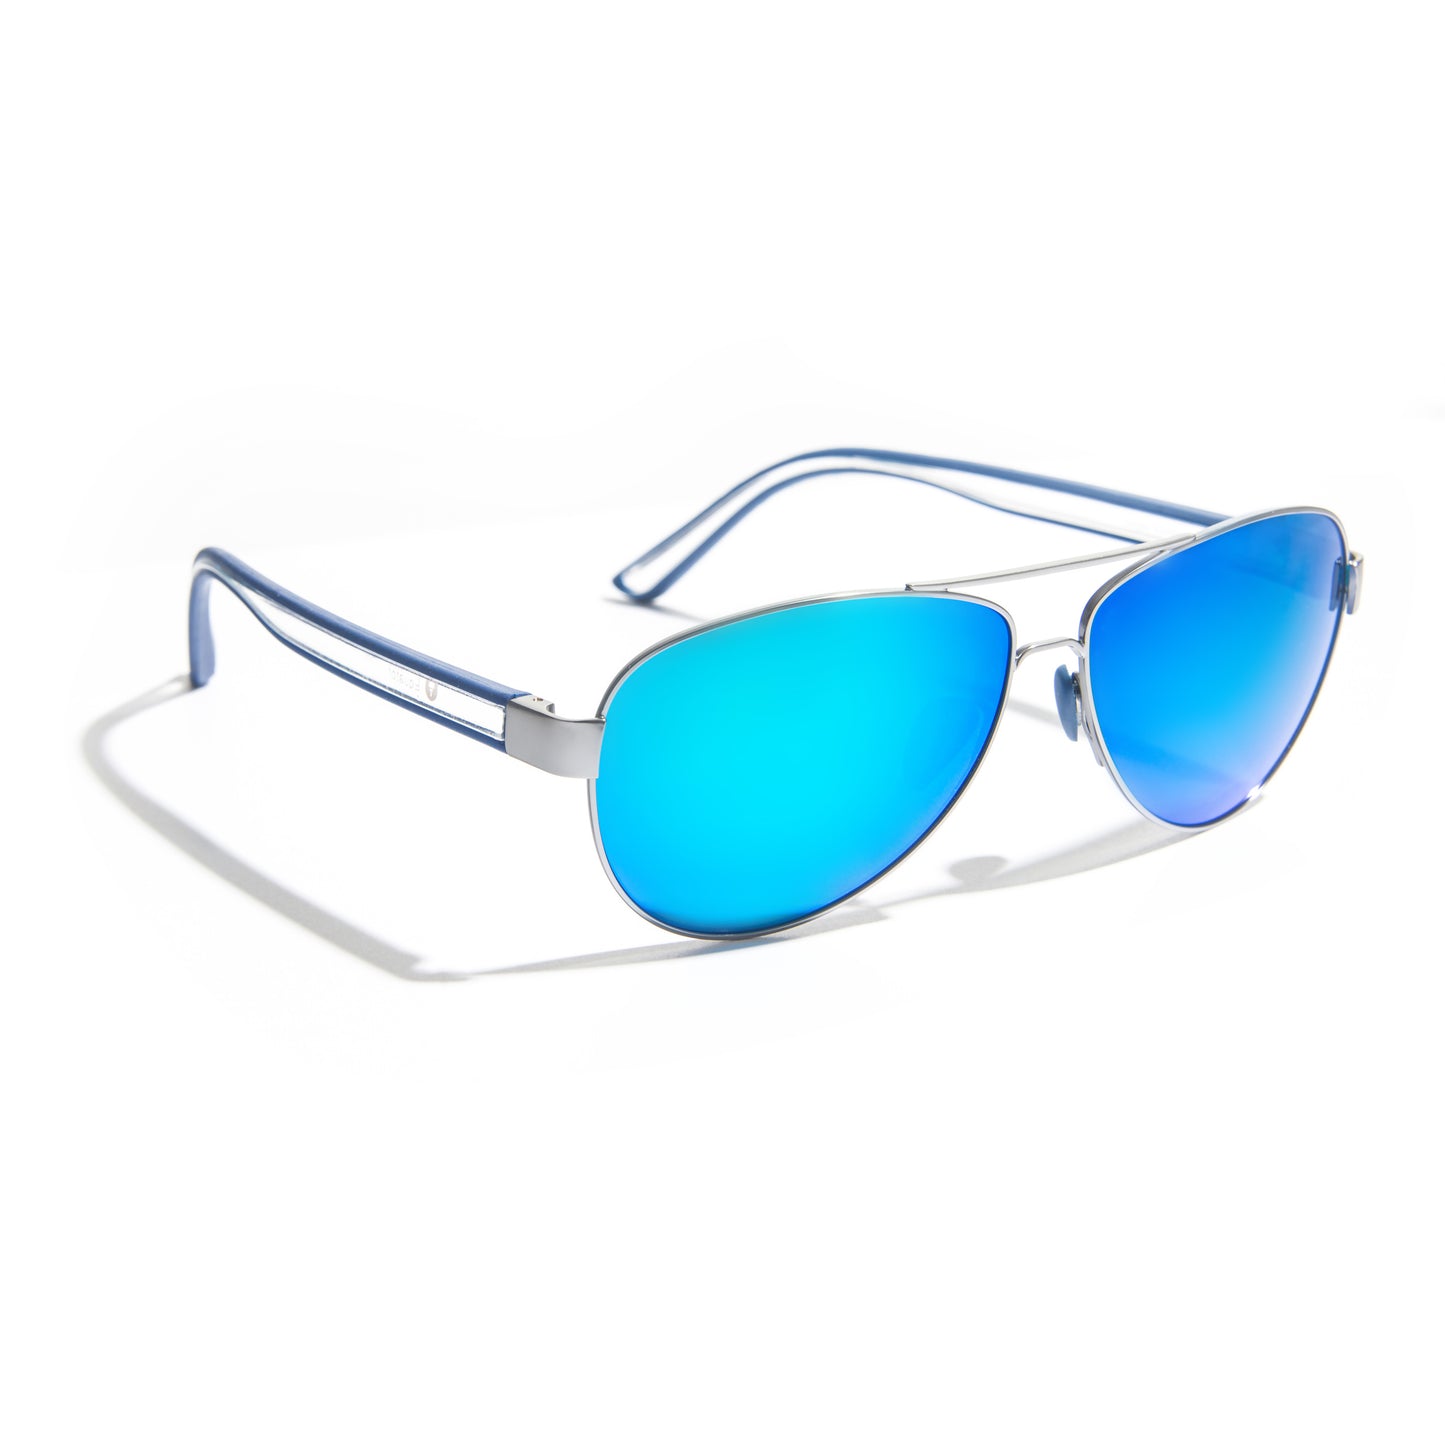 Gidgee Eyes Equator Sunglasses - Blue